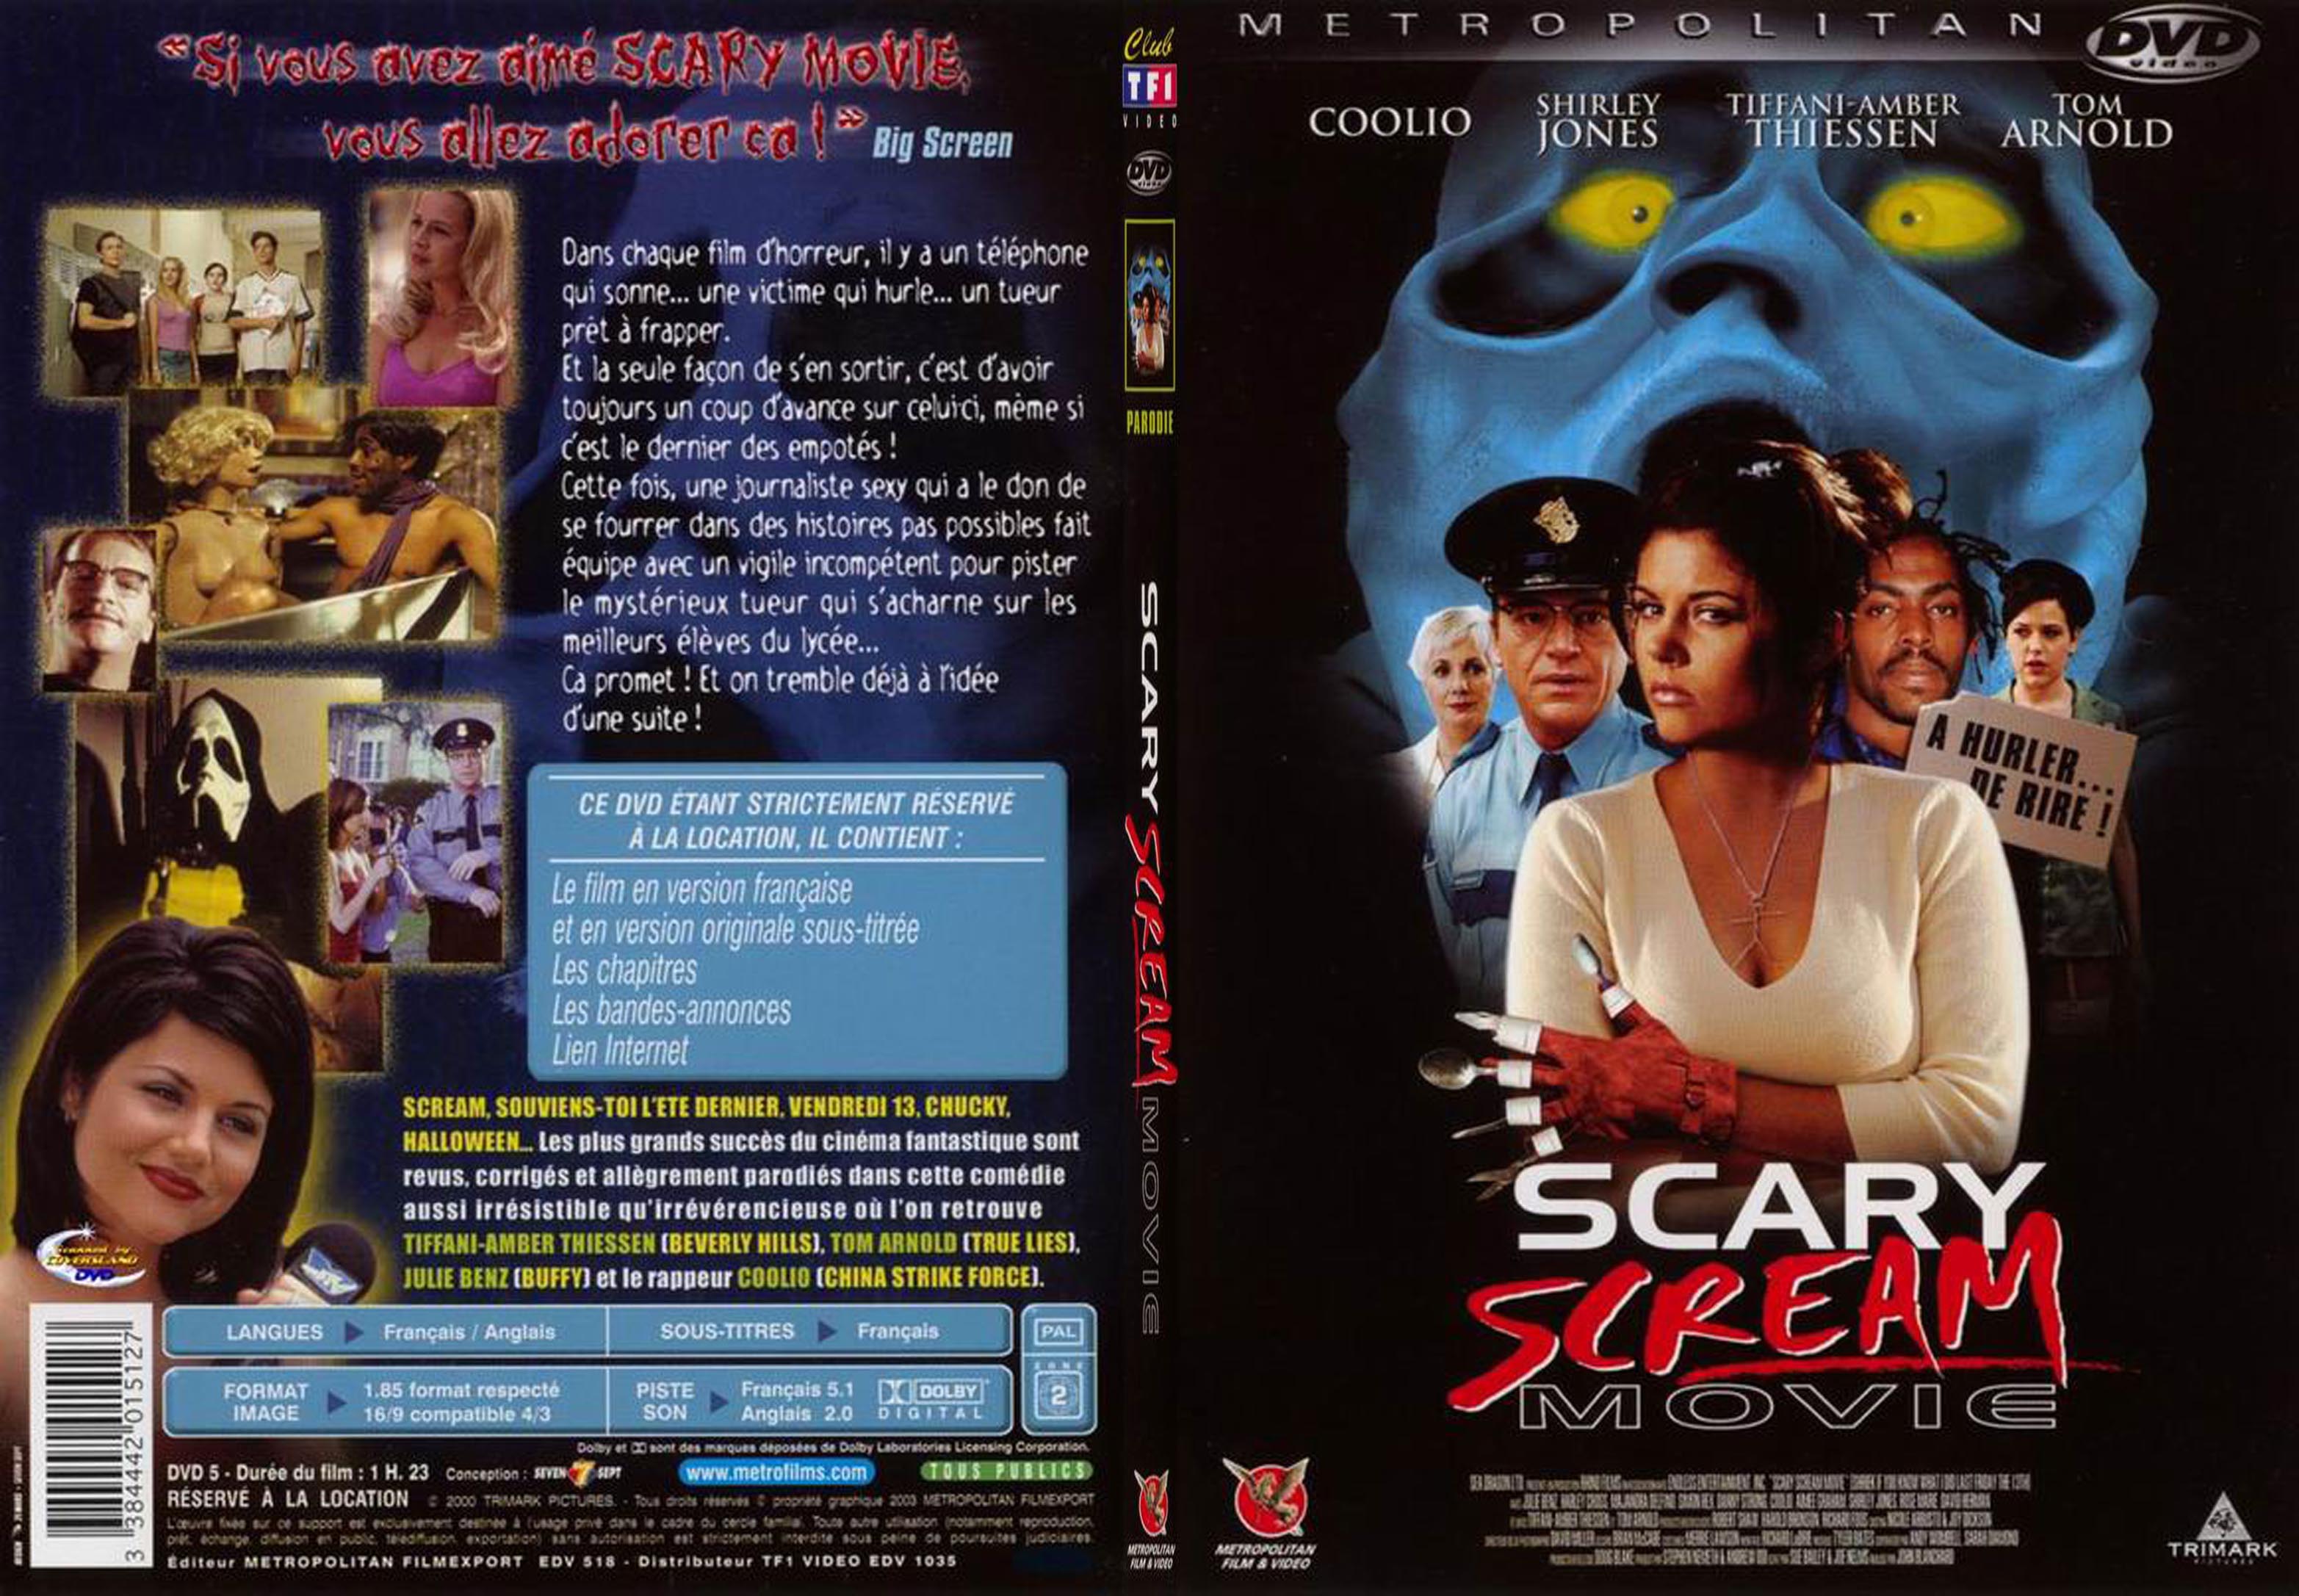 Jaquette DVD Scary scream movie - SLIM